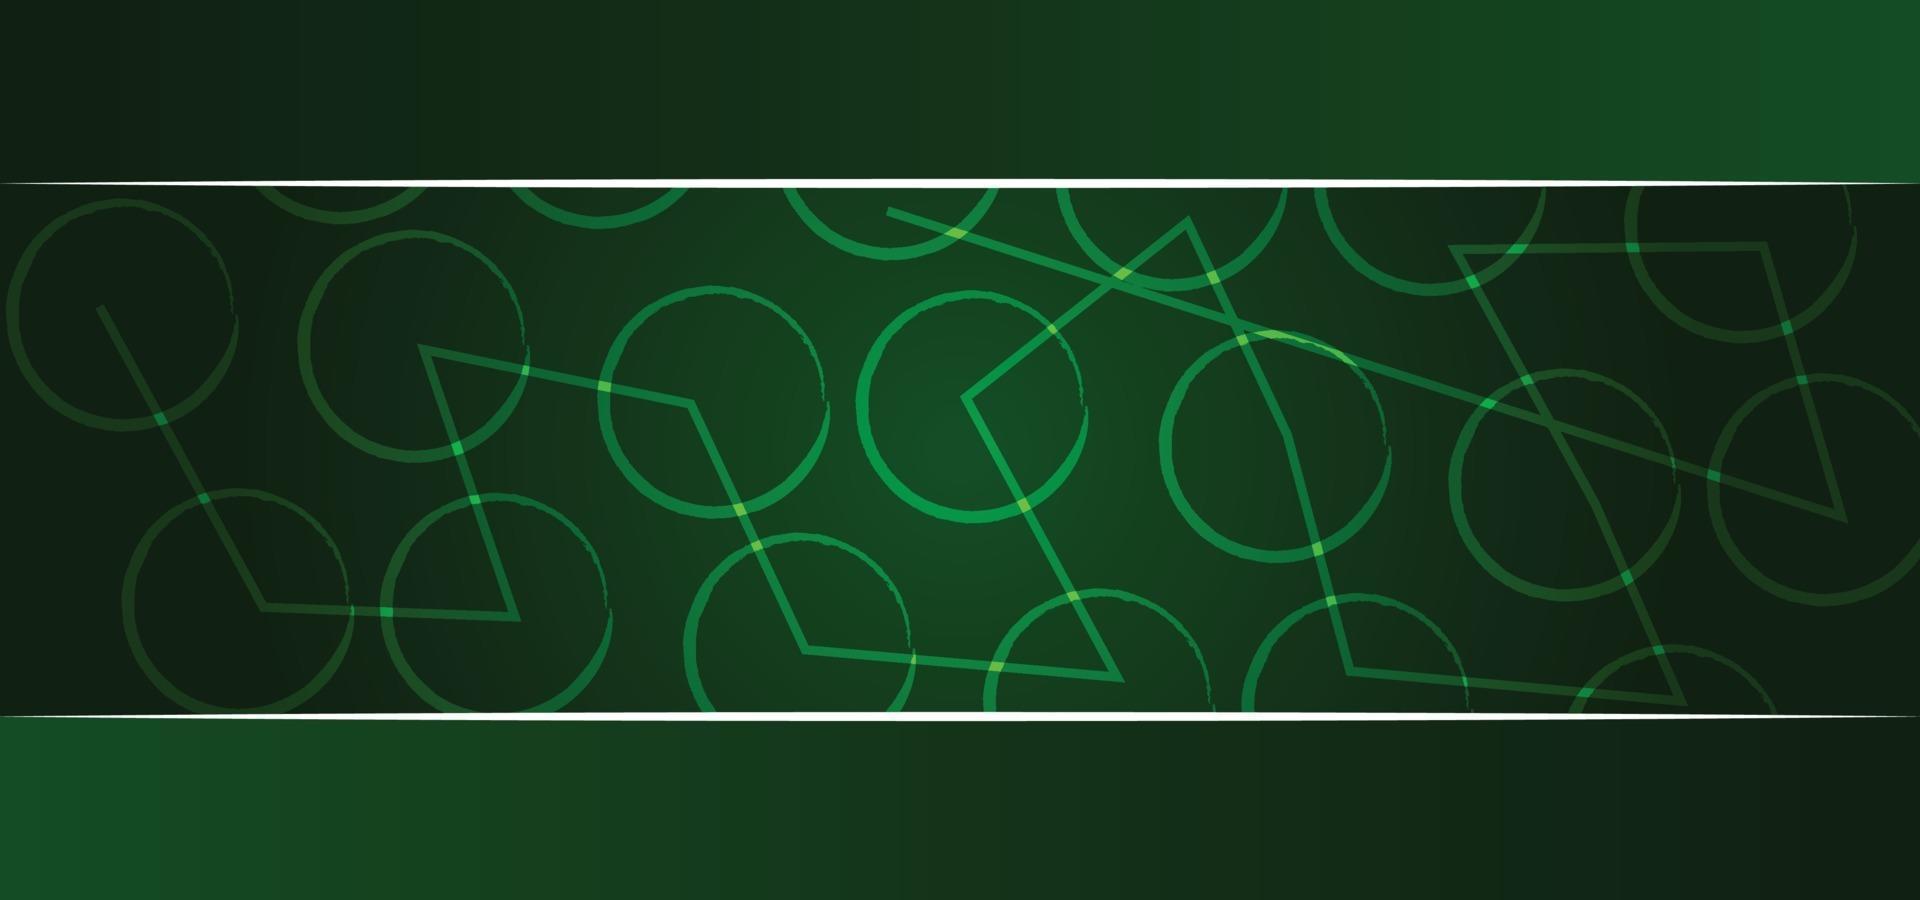 padrão geométrico verde fundo bonito ou banner vetor